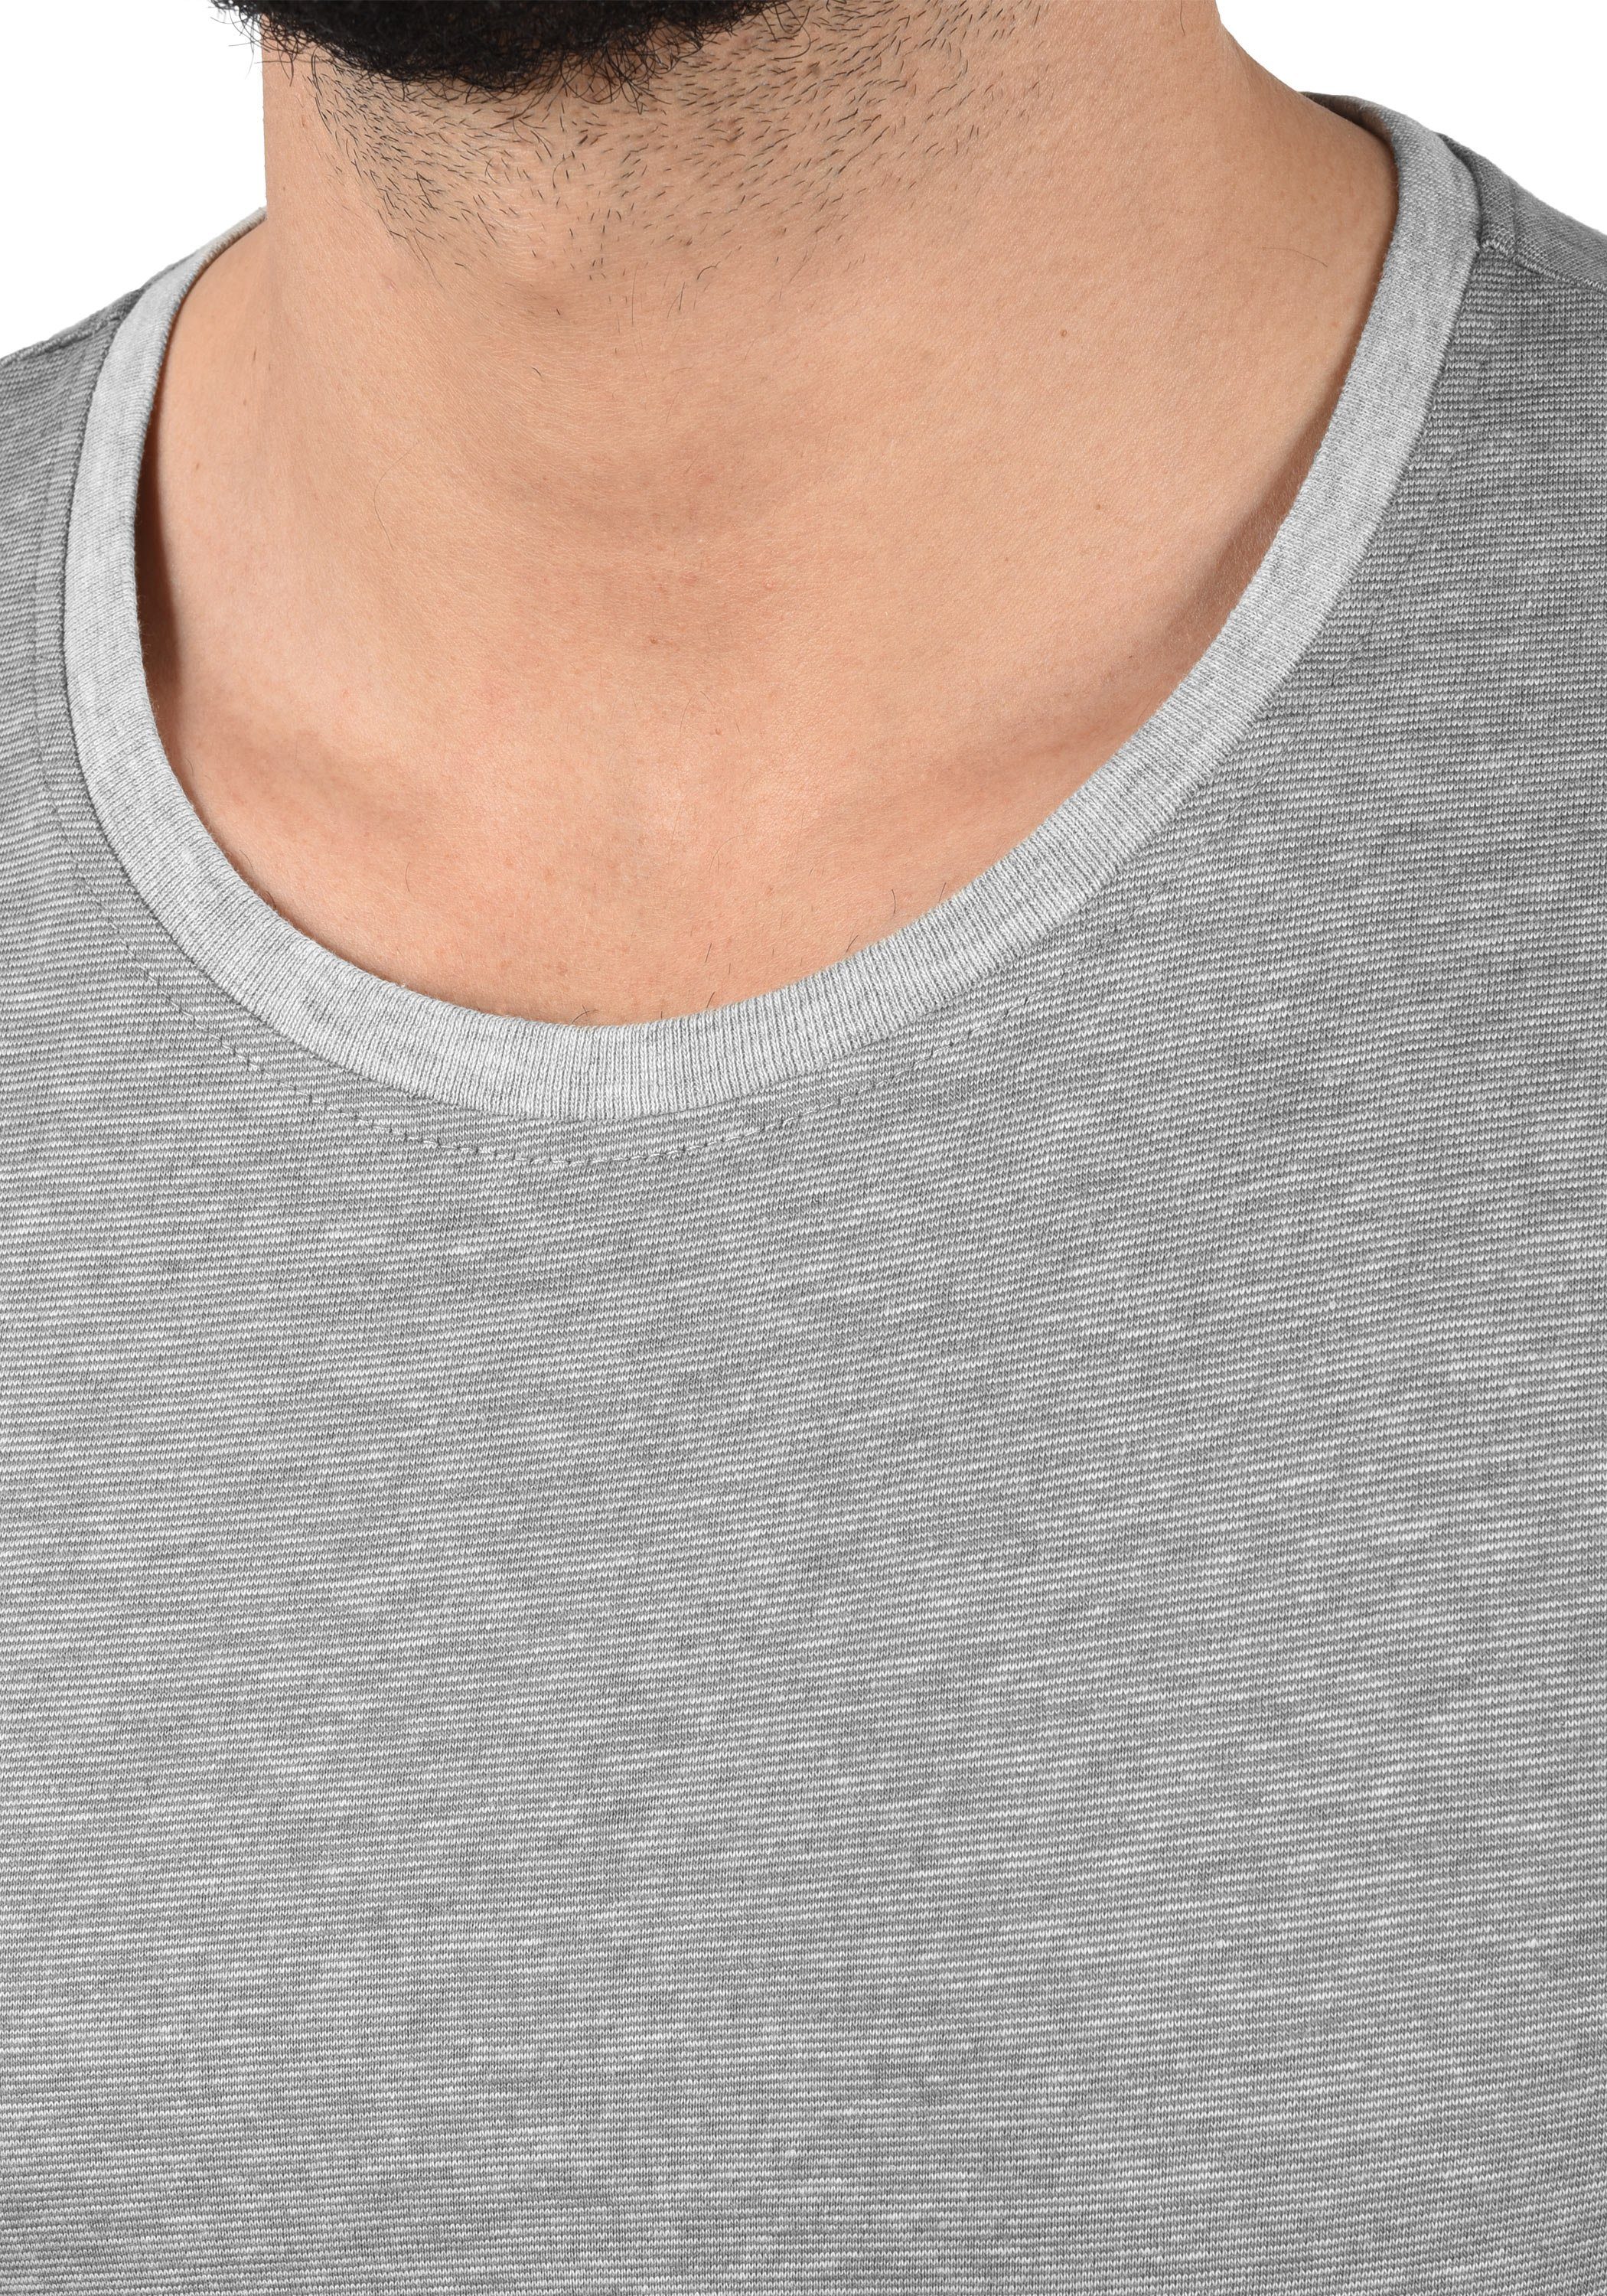 Solid T-Shirt Grey (8236) SDNed Melangelook in T-Shirt Melange